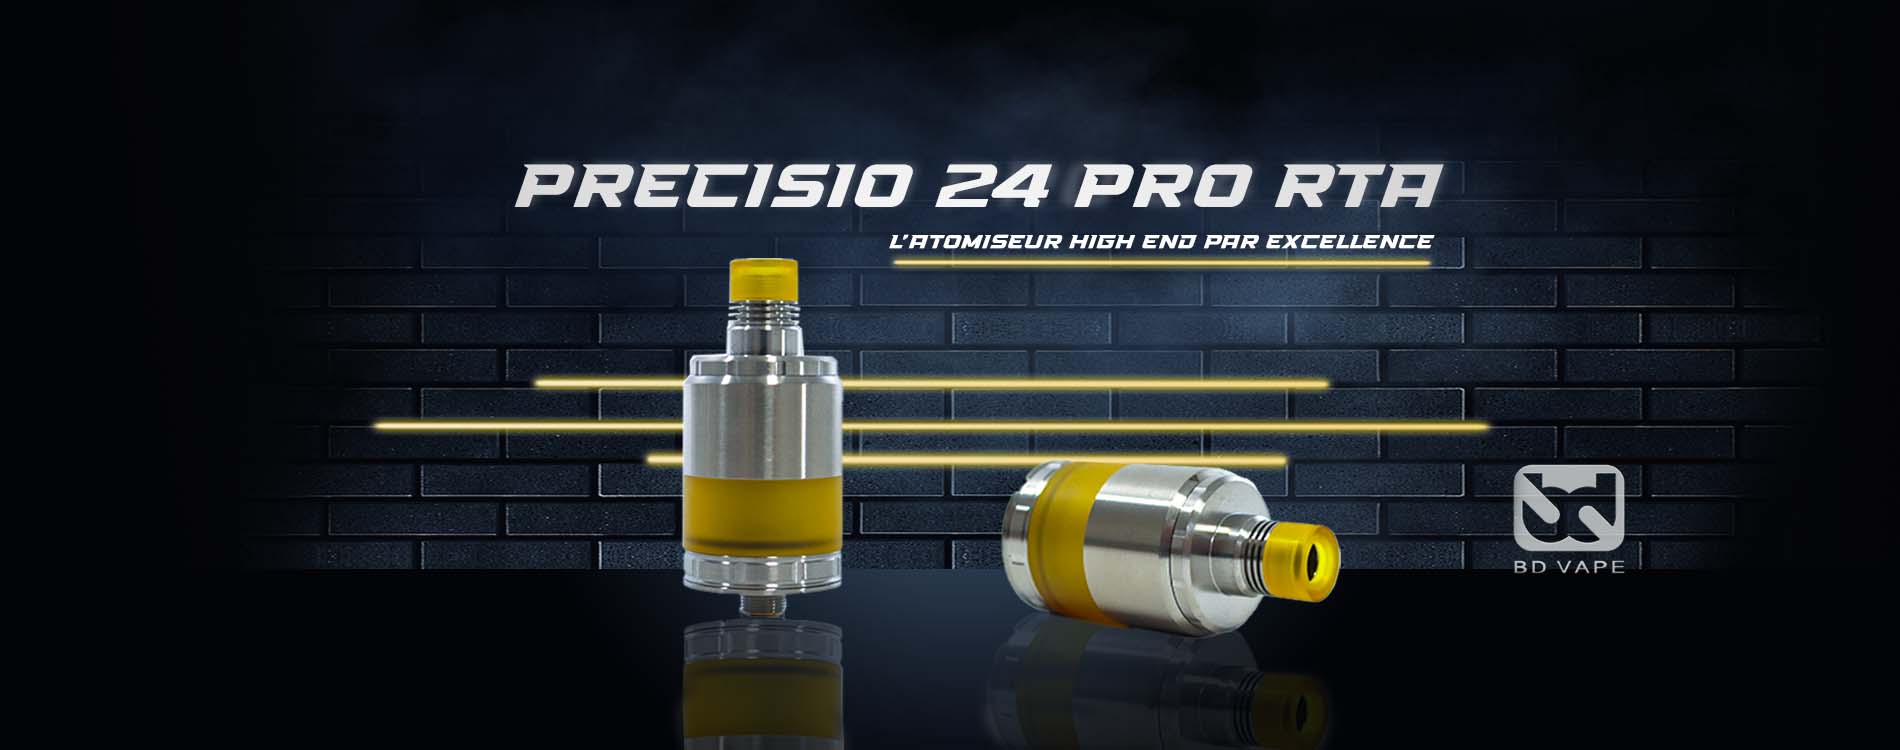 PRECISIO Pro 24 RTA - Fumytech